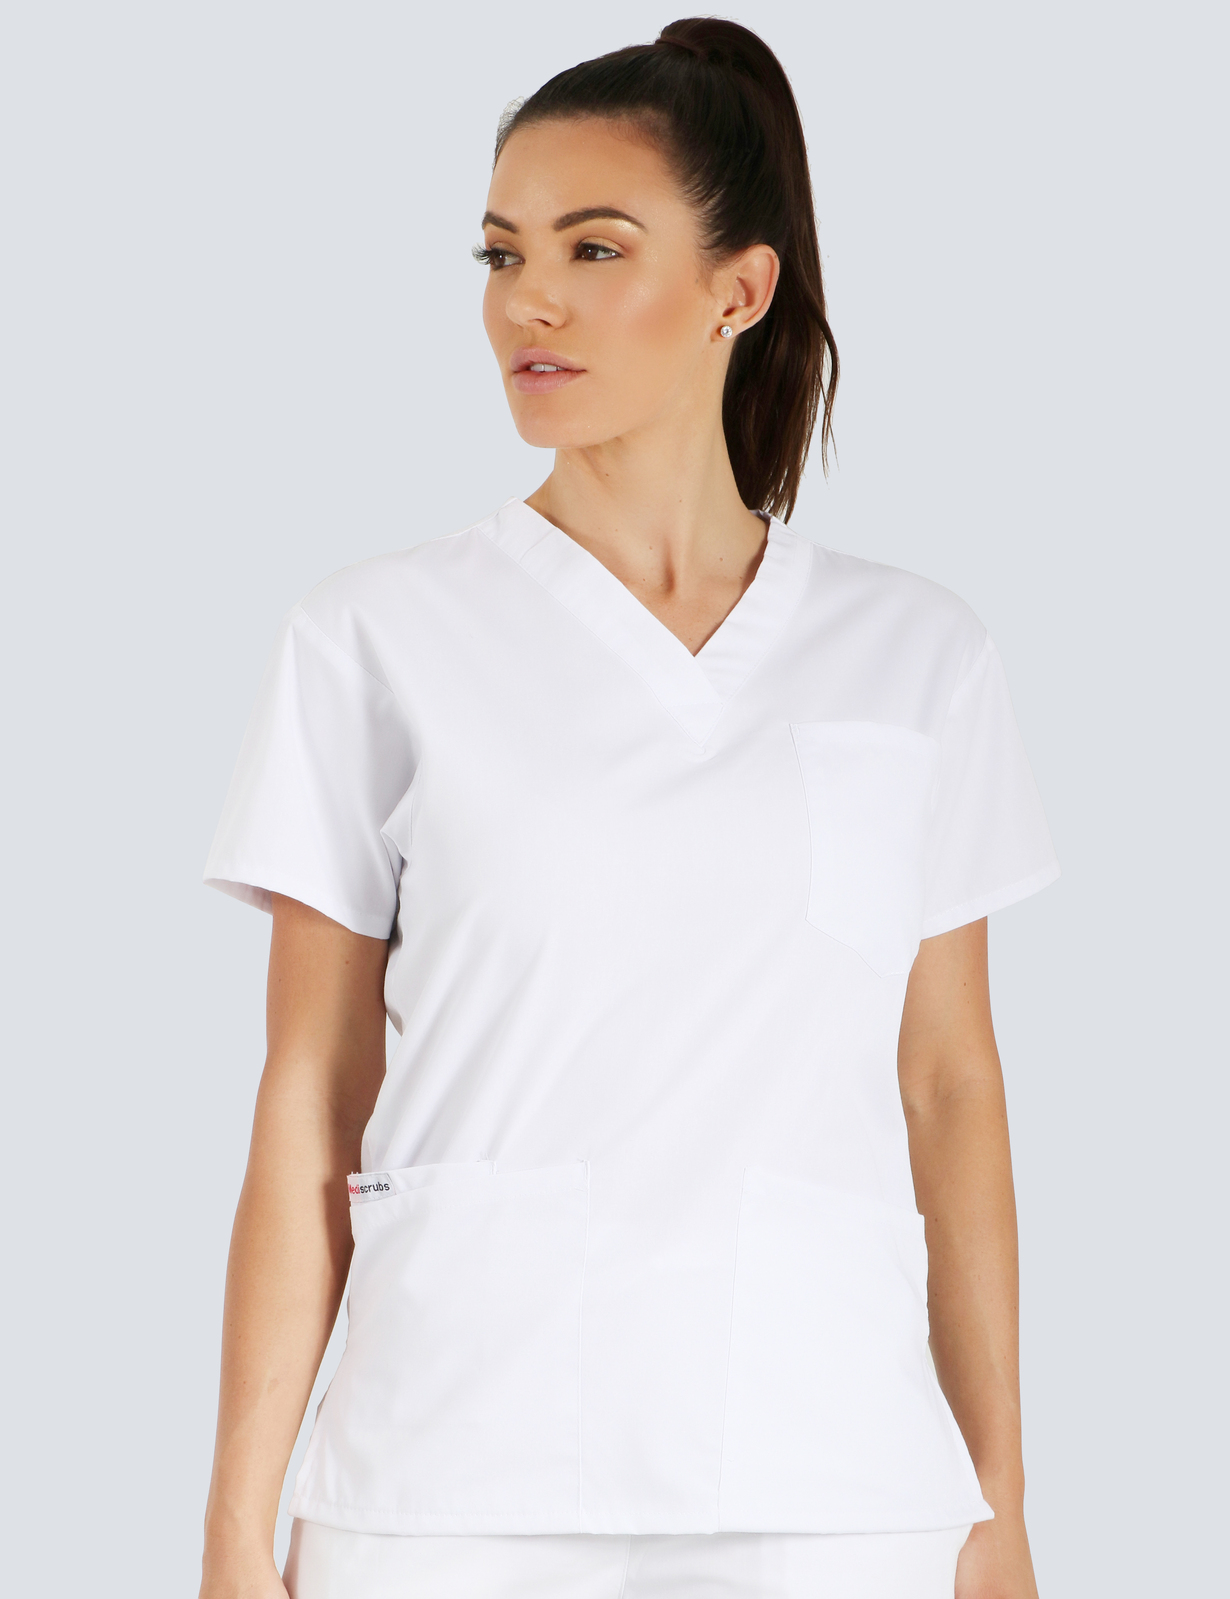 Queensland Children's Hospital Emergency Department Clinical Nurse  Uniform Top Bundle  (4 Pocket Top in White  incl Logos)